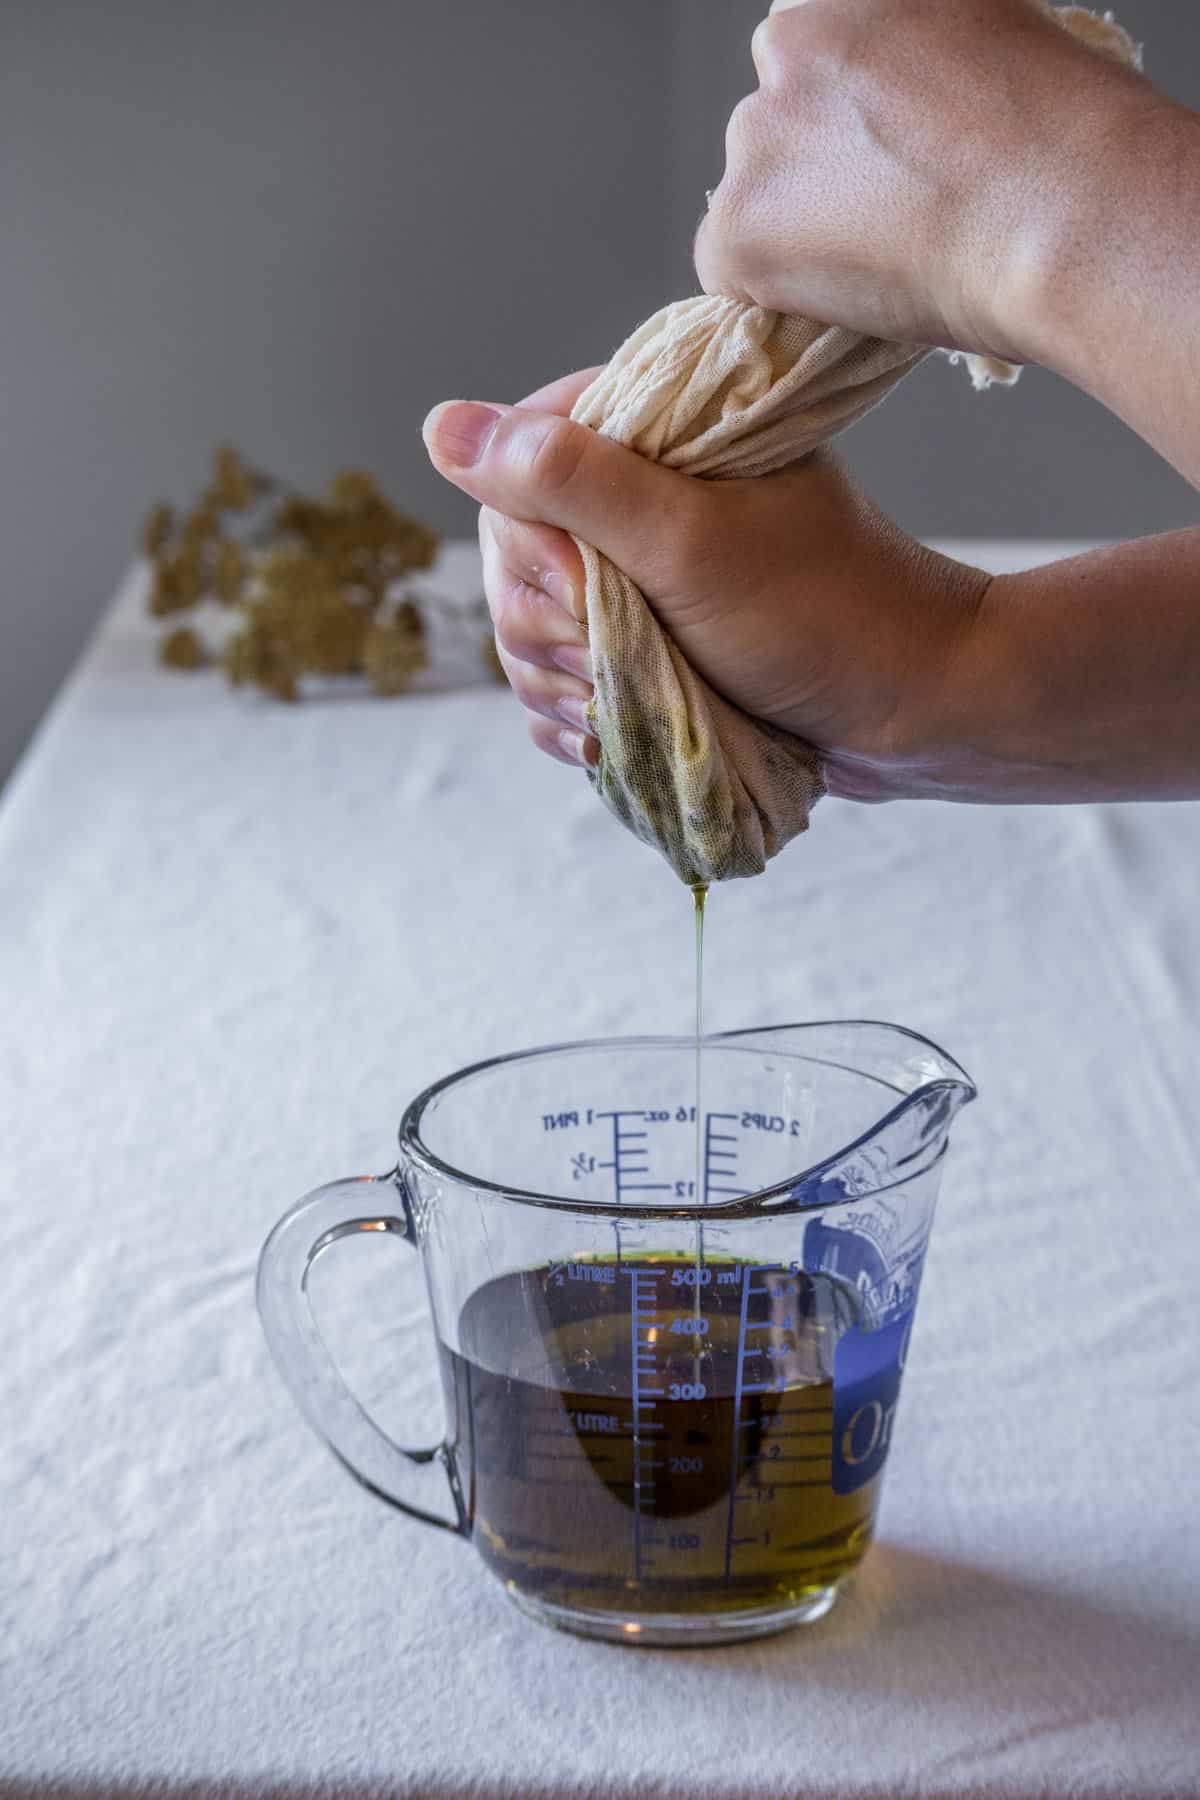 Homemade yarrow oil straining through a cheesecloth